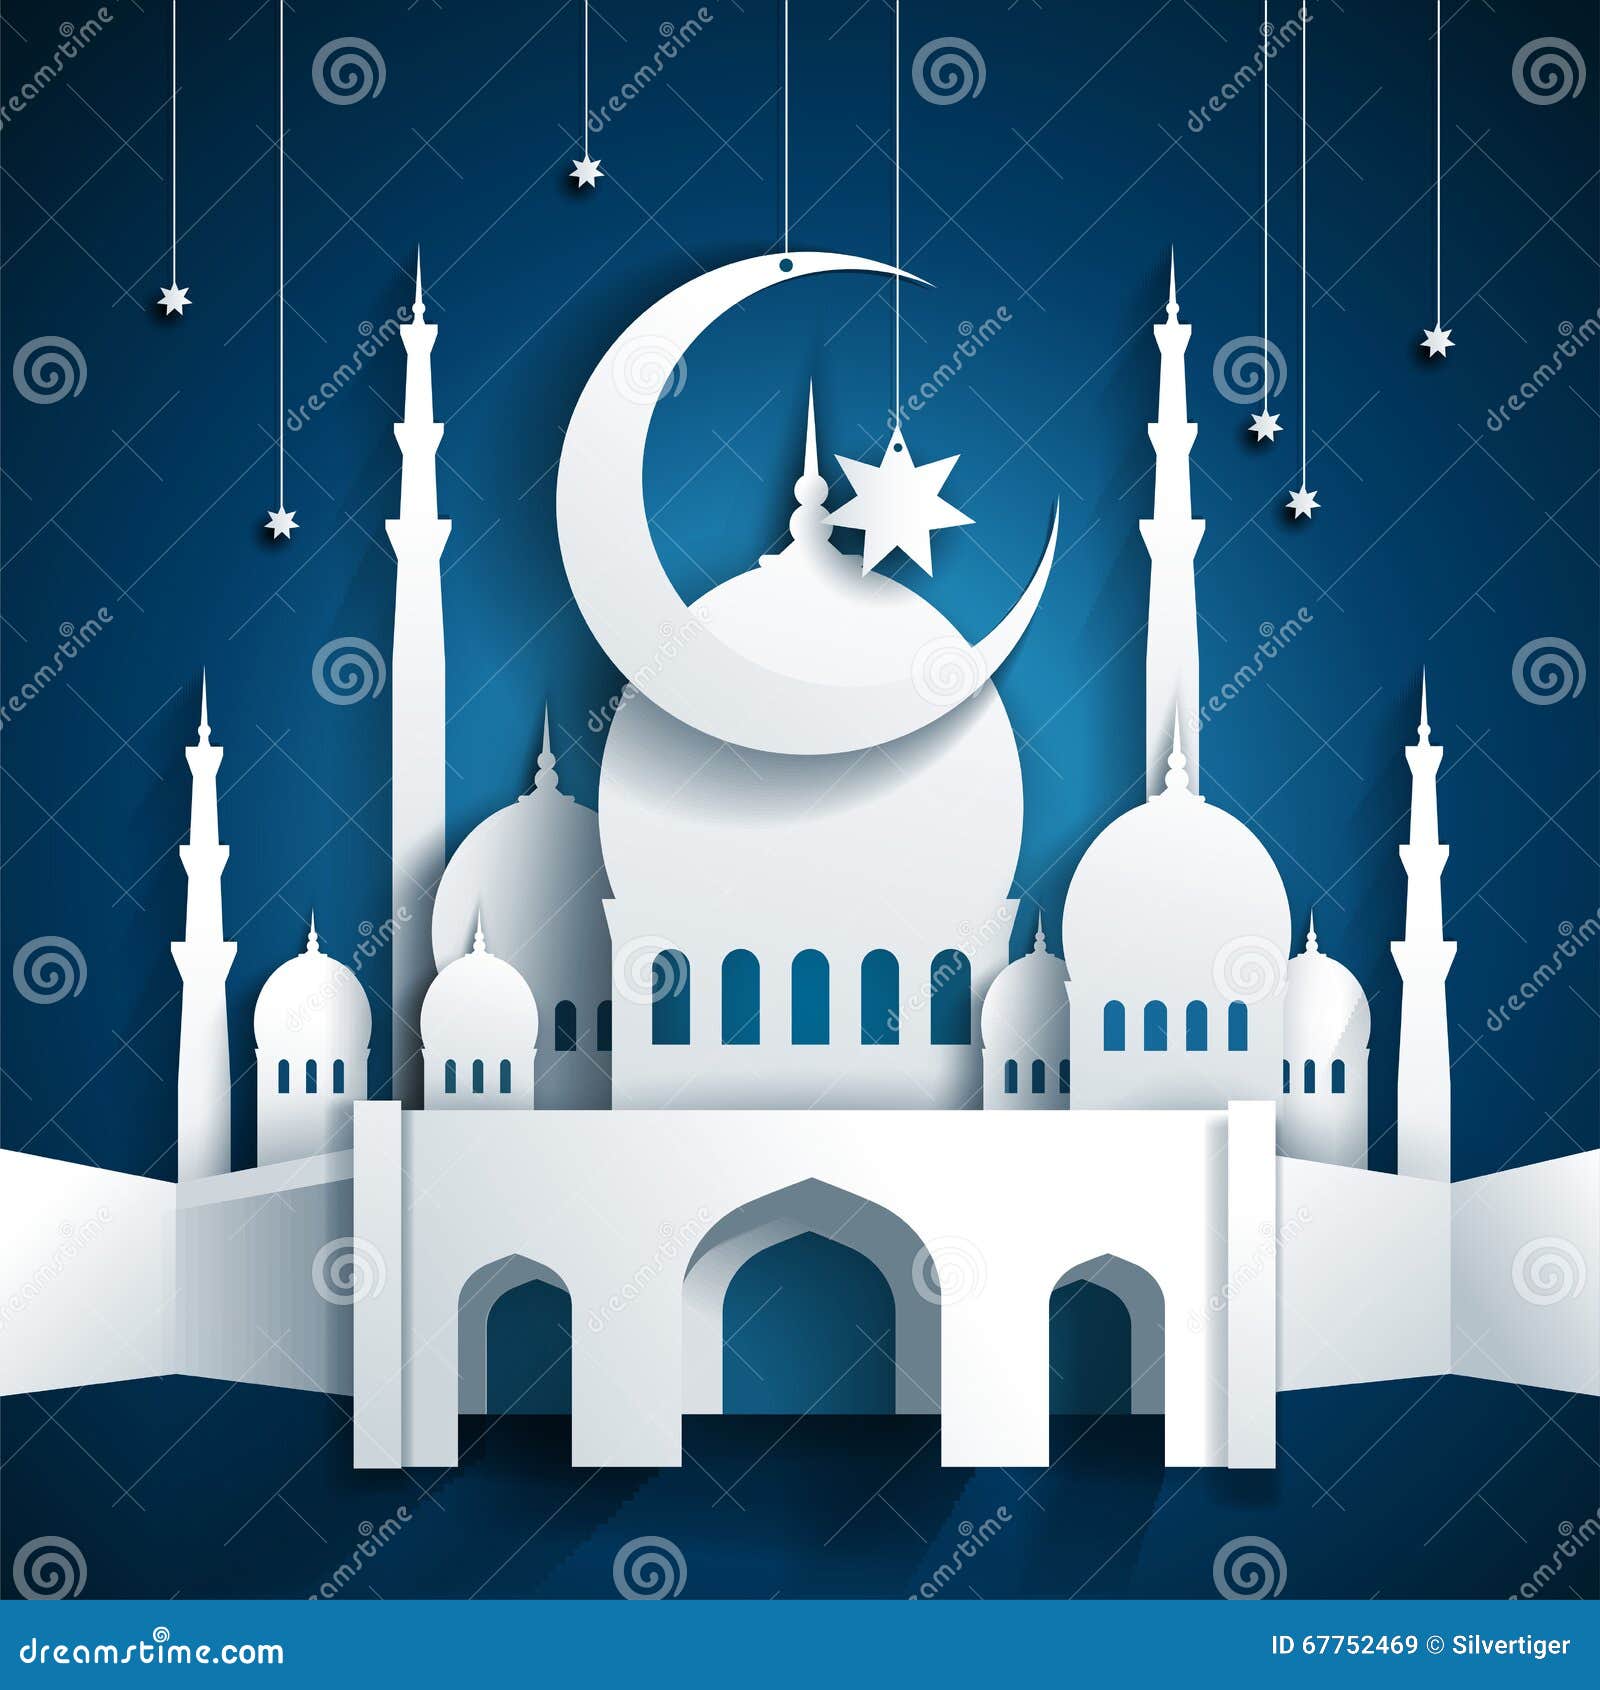 3d mosque and crescent moon with stars - ramadan kareem or ramazan kareem background - paper craft style - 